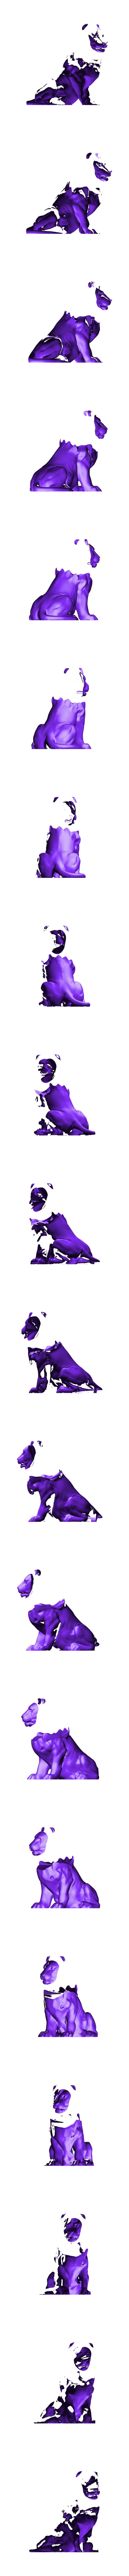 Lion_light.stl Download free STL file Dual Extrusion Lion • 3D printing model, JayOmega